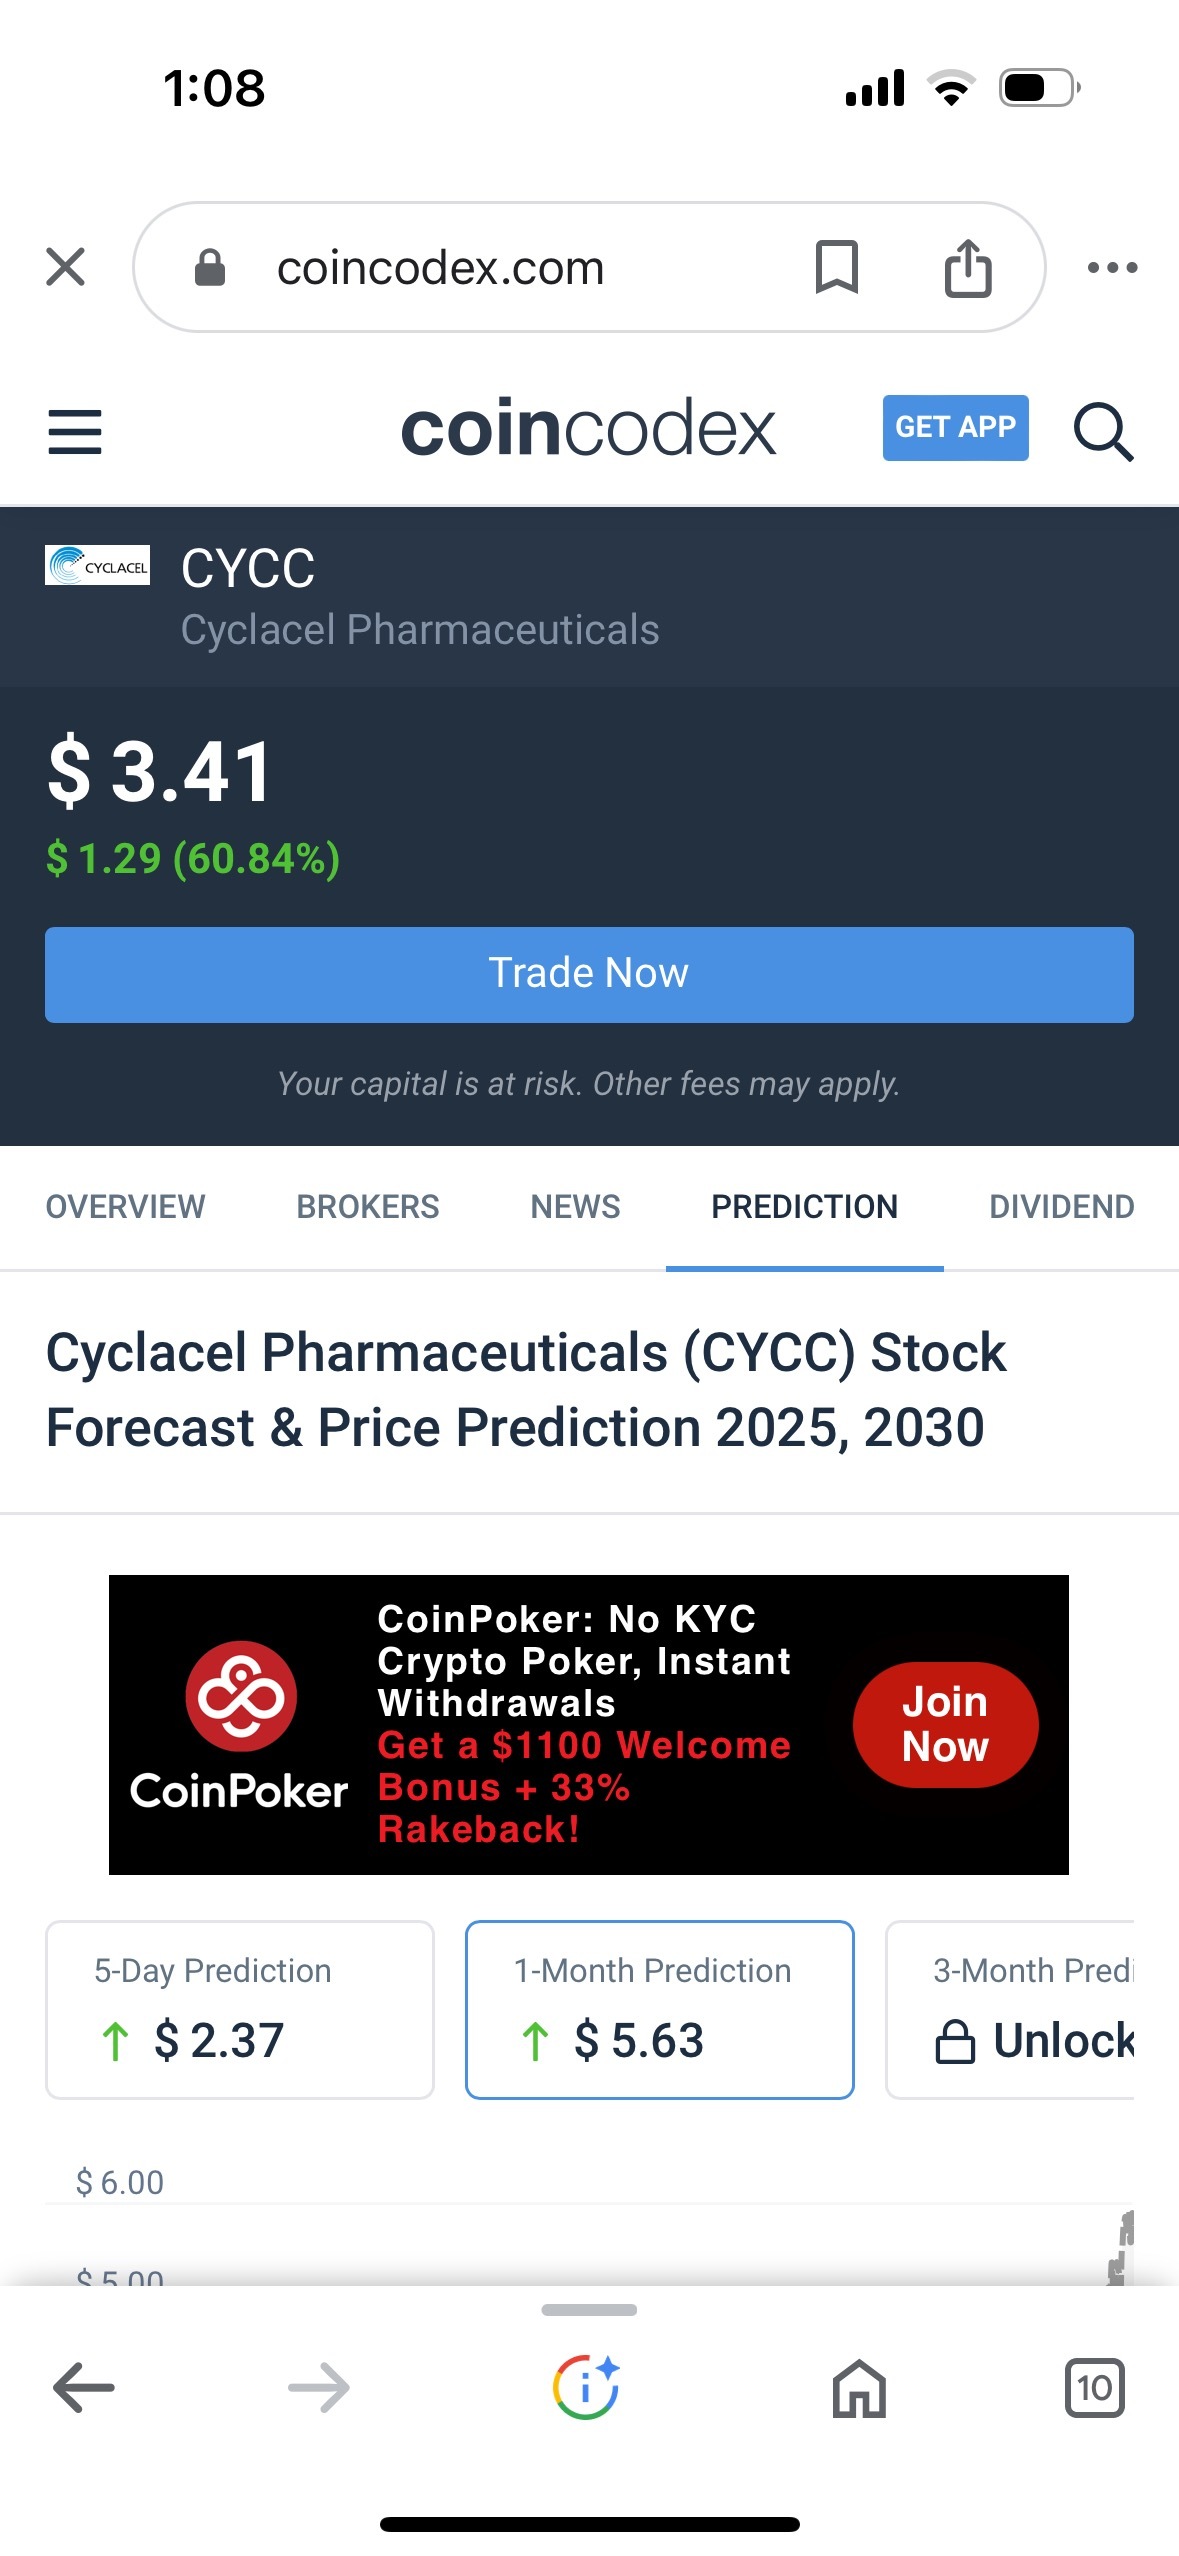 $Cyclacel Pharmaceuticals (CYCC.US)$